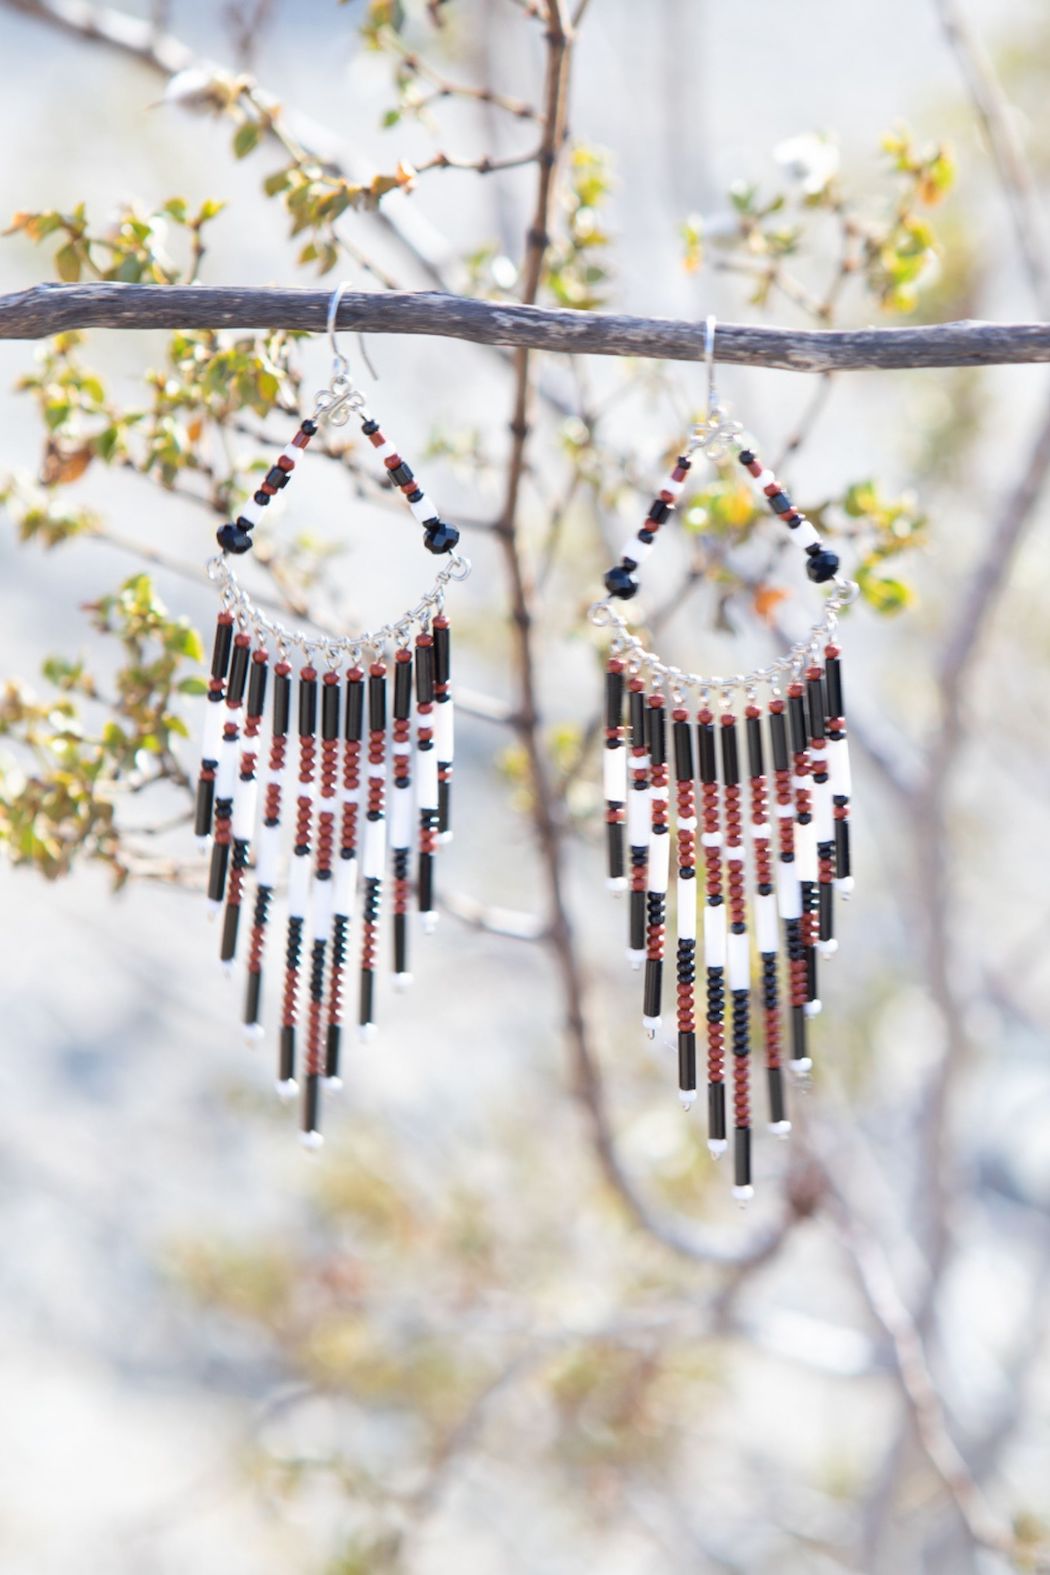 native American jewelry